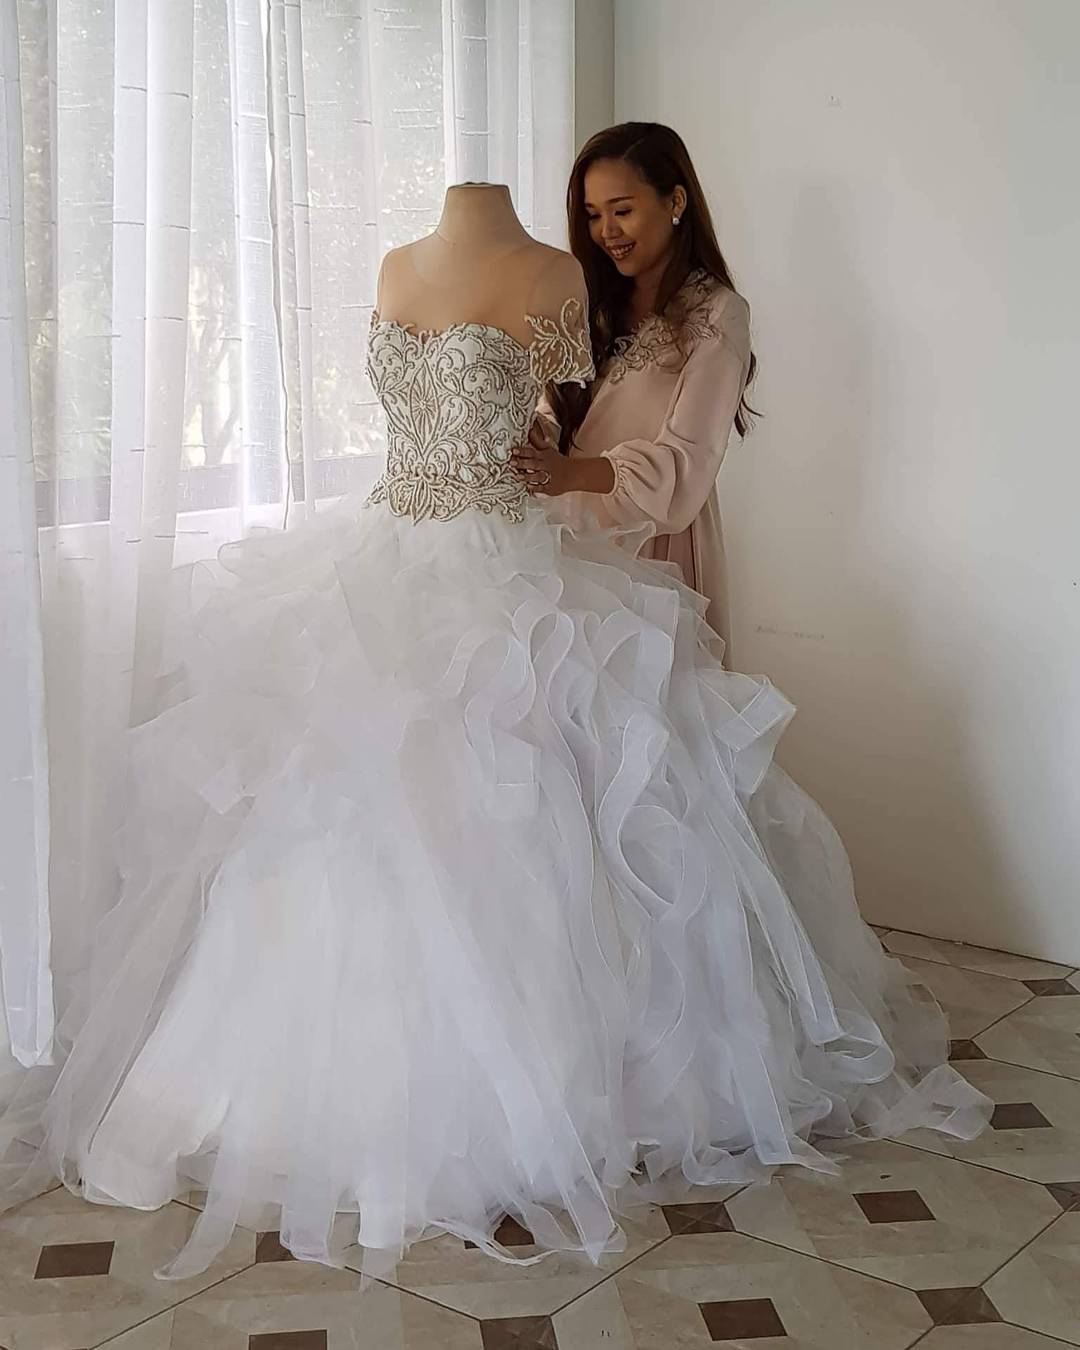 Katrine s bridal  gown  RoyAnne Camillia Couture Bridal  